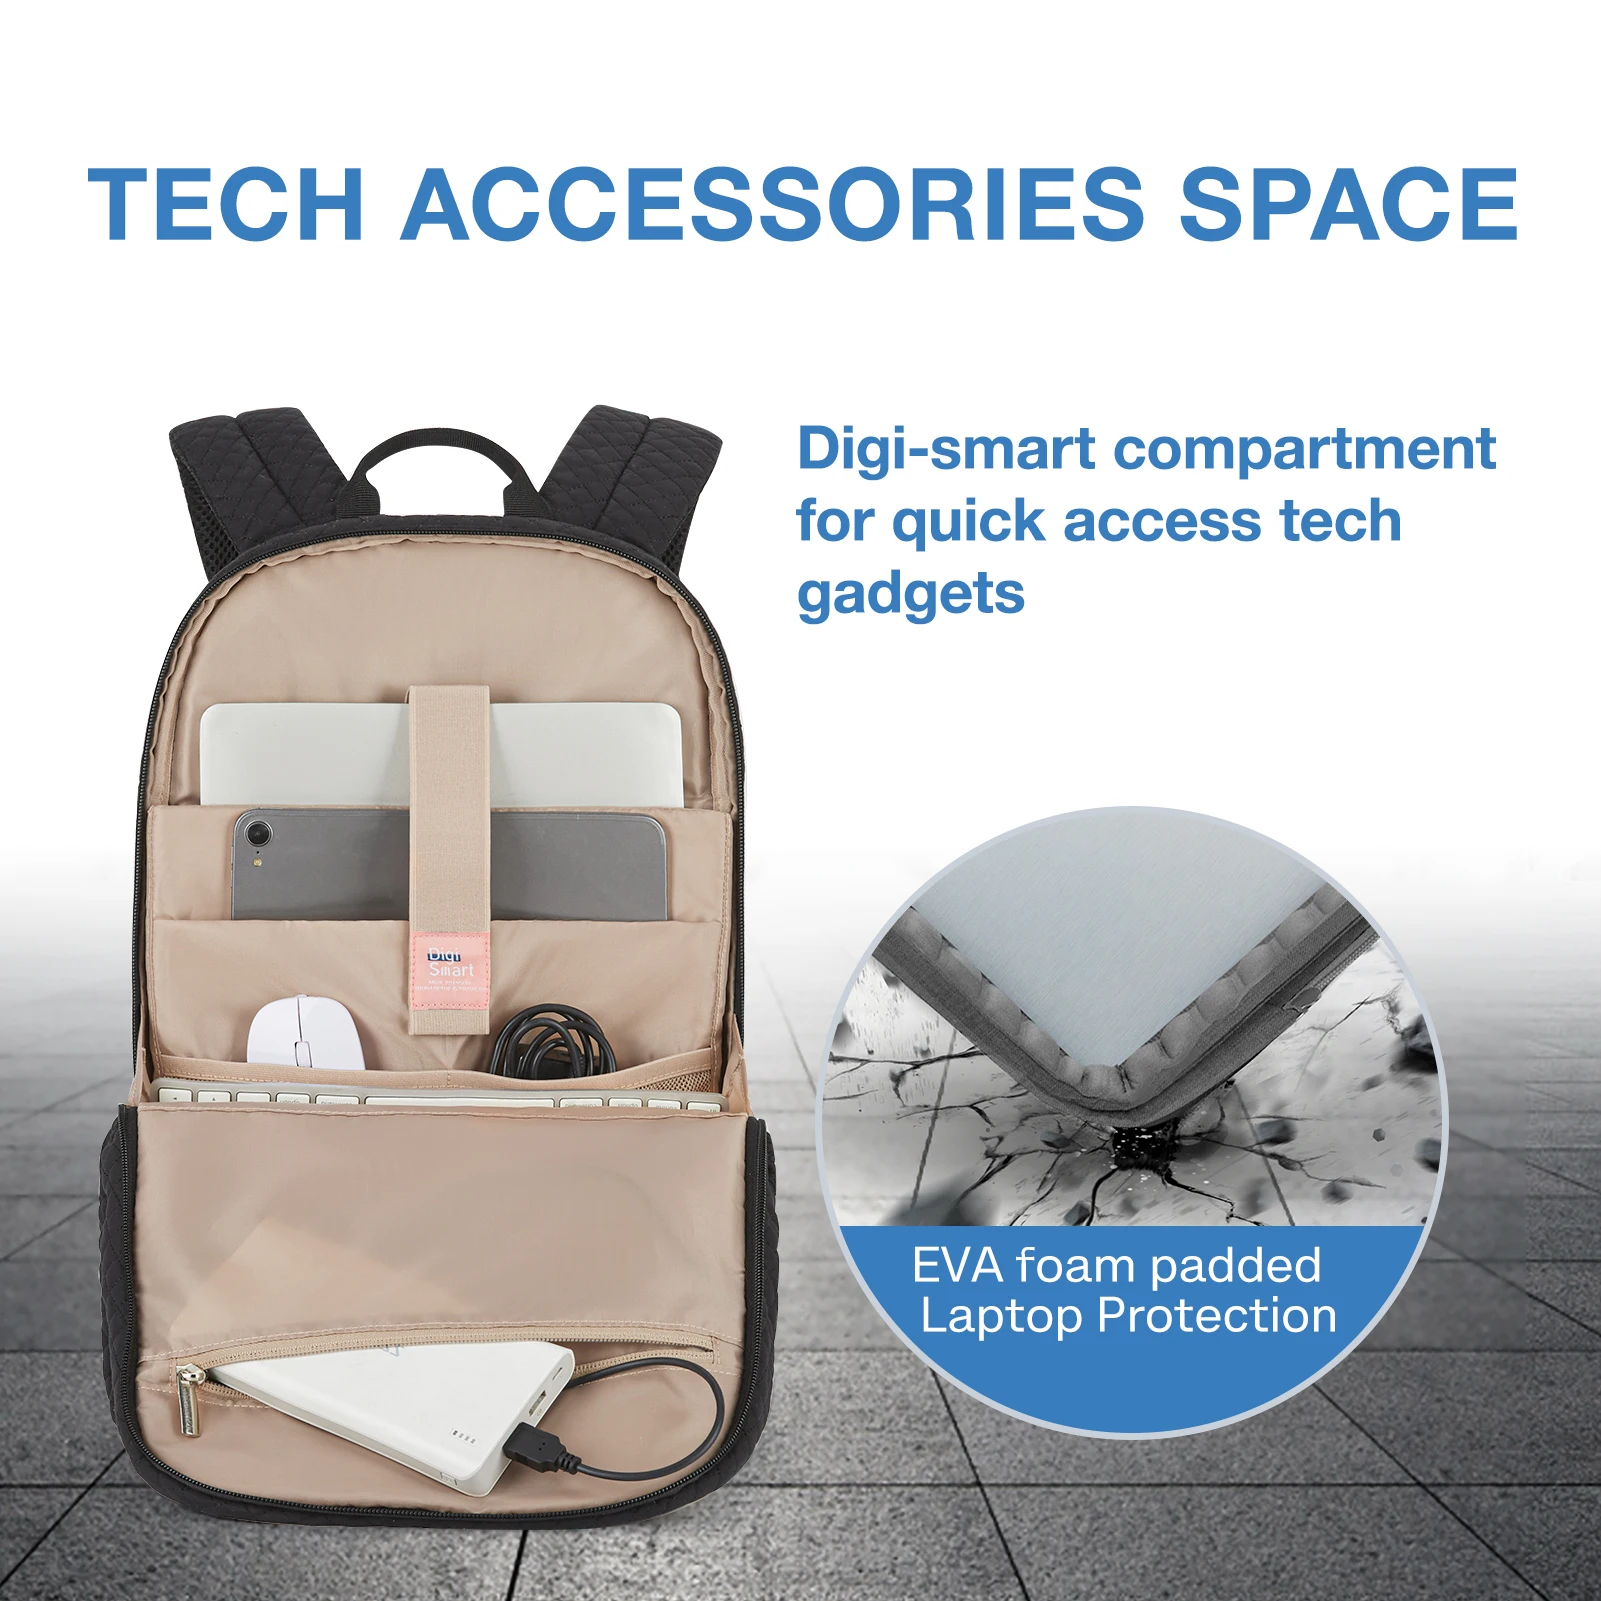 BAGSMART Anti-theft Laptop Backpack Men Women Multiple Pockets Travel Business College School Book Bag with USB Charging Port